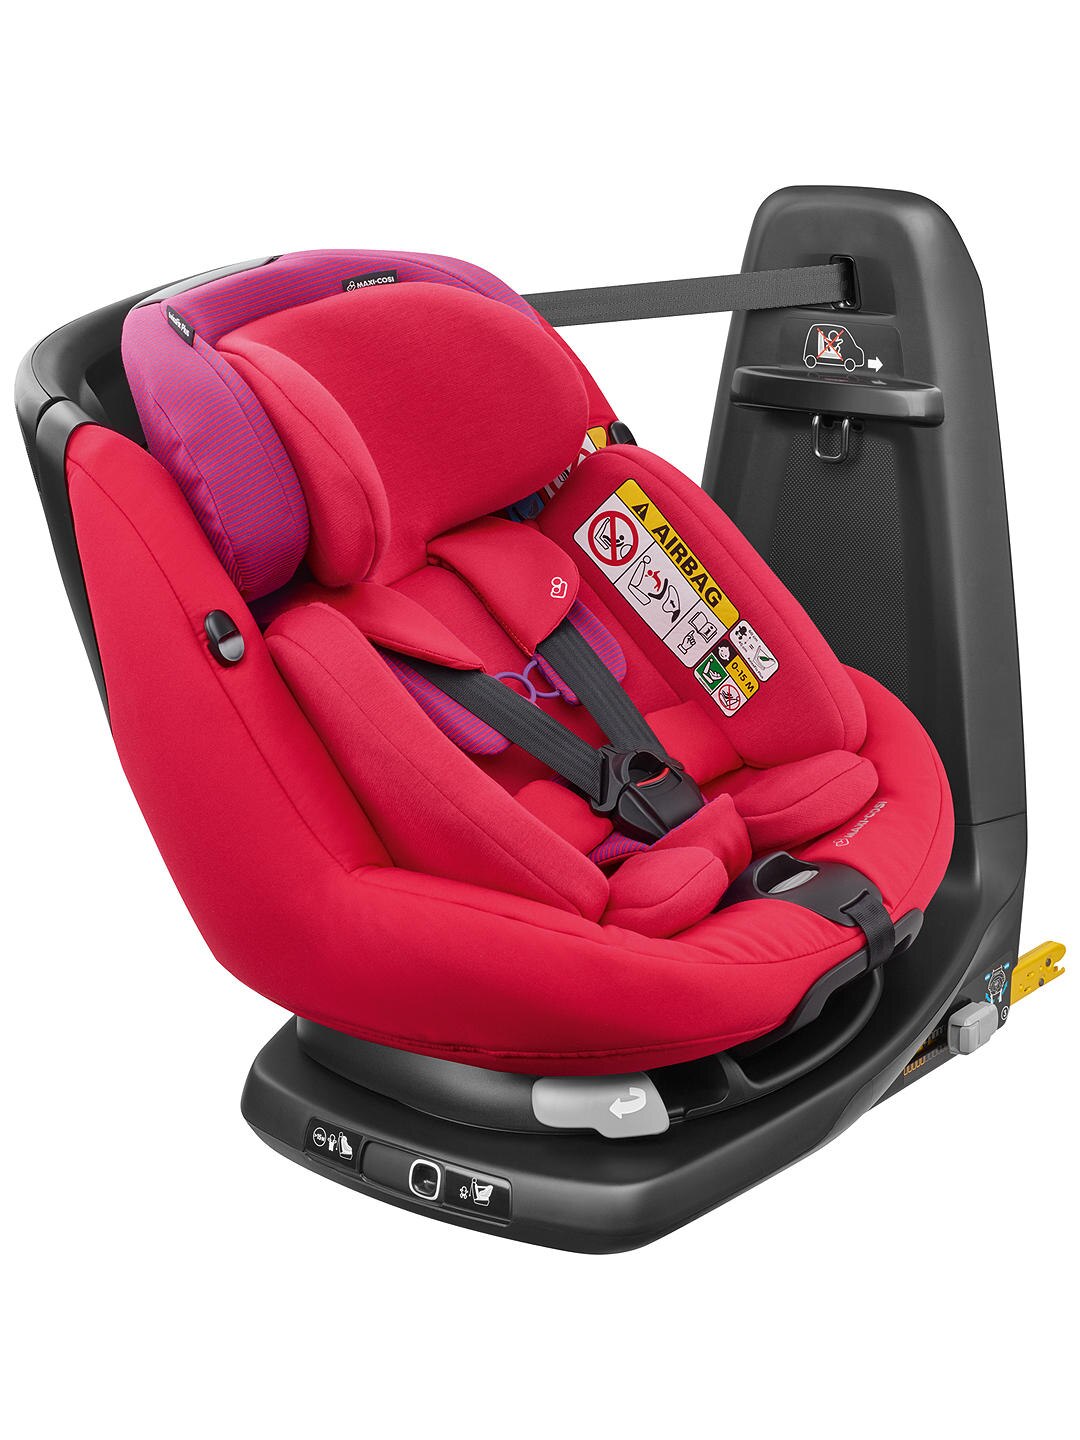 Soedan zondaar Logisch Maxi Cosi Axissfix Plus 旋轉汽車座椅(R129 I-size) (初生至4歲) - Twins Baby Company  Limited 孖寶嬰兒用品有限公司